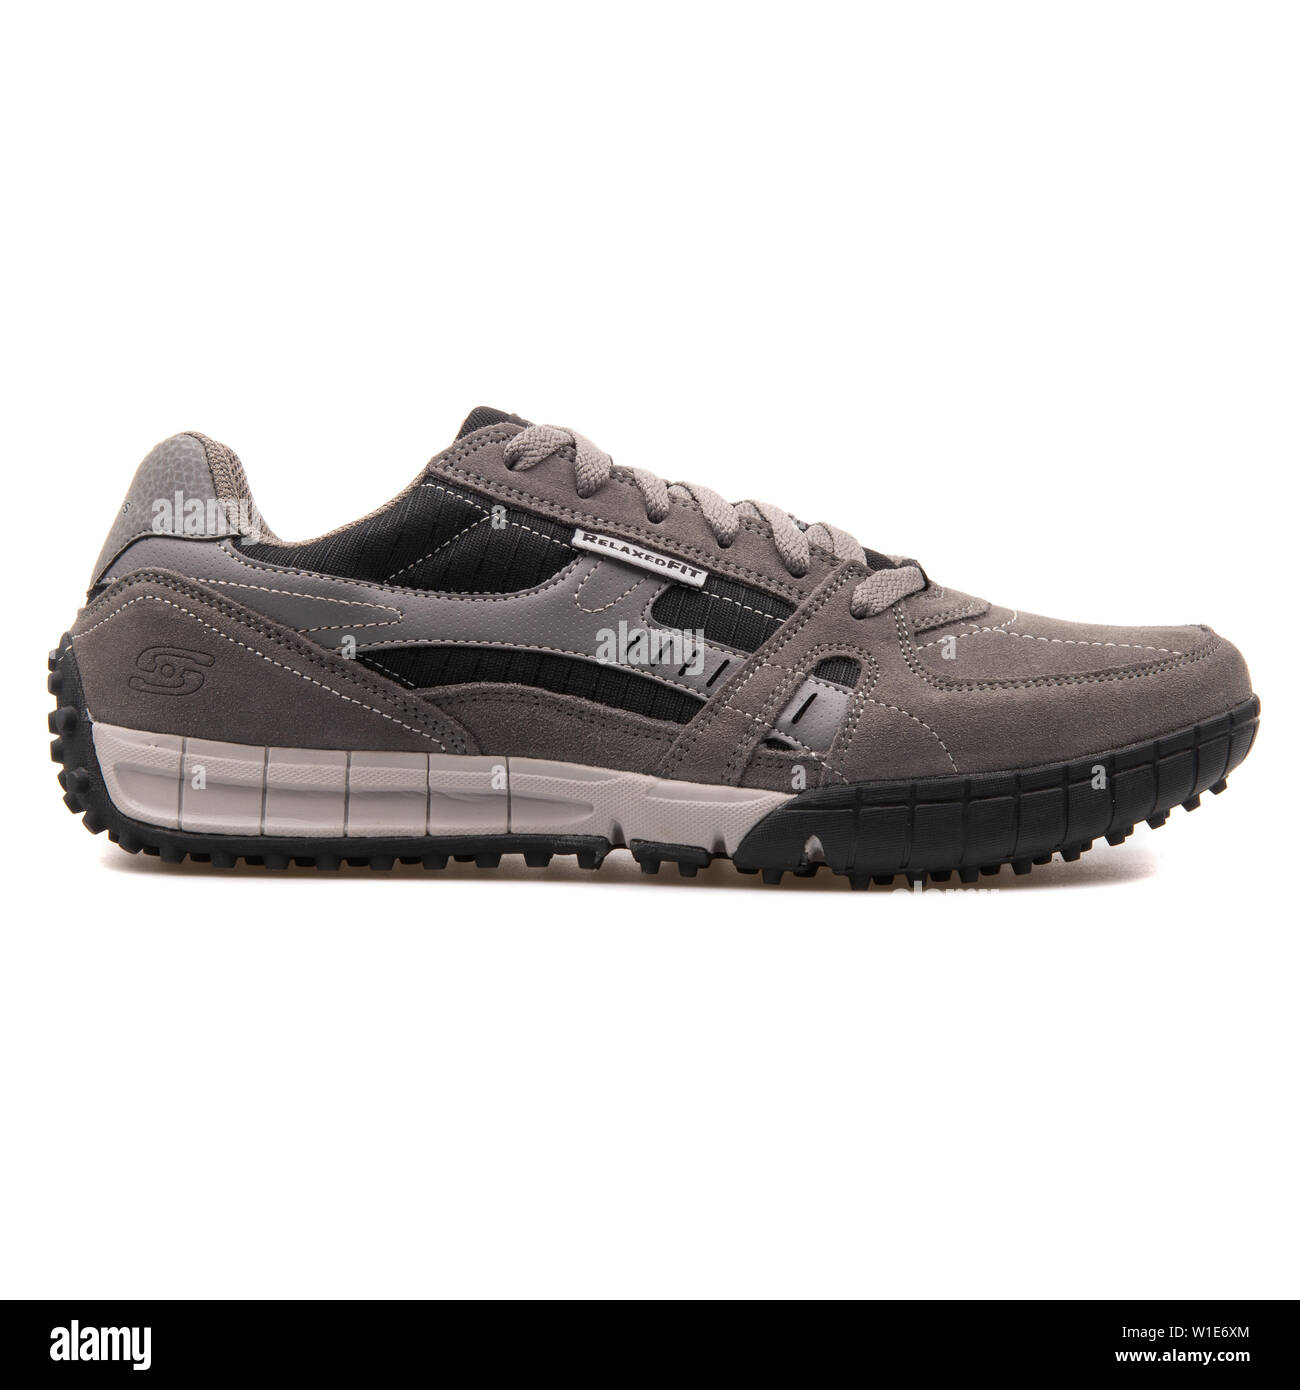 Skechers Floater gris y negro Men's Sneakers 51328-BKGY Fotografía de stock - Alamy